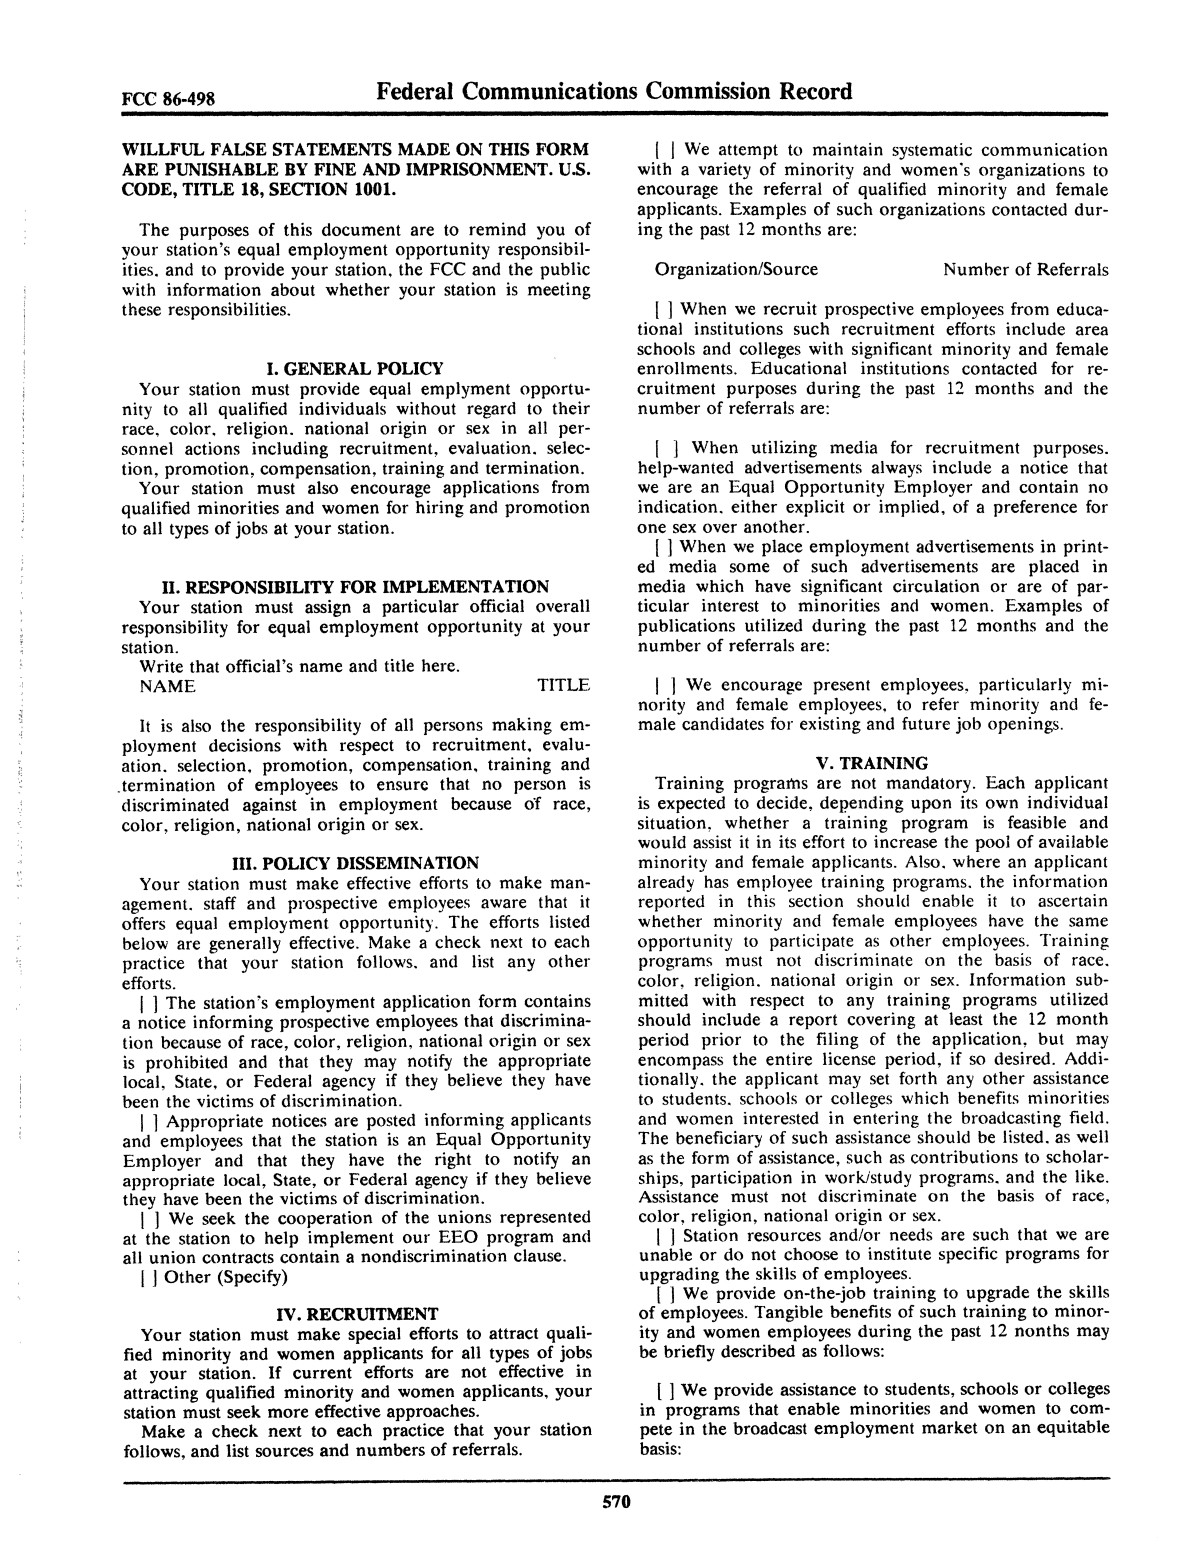 FCC Record, Volume 1, No. 4, Pages 549 to 785, November 10 - November 21, 1986
                                                
                                                    570
                                                